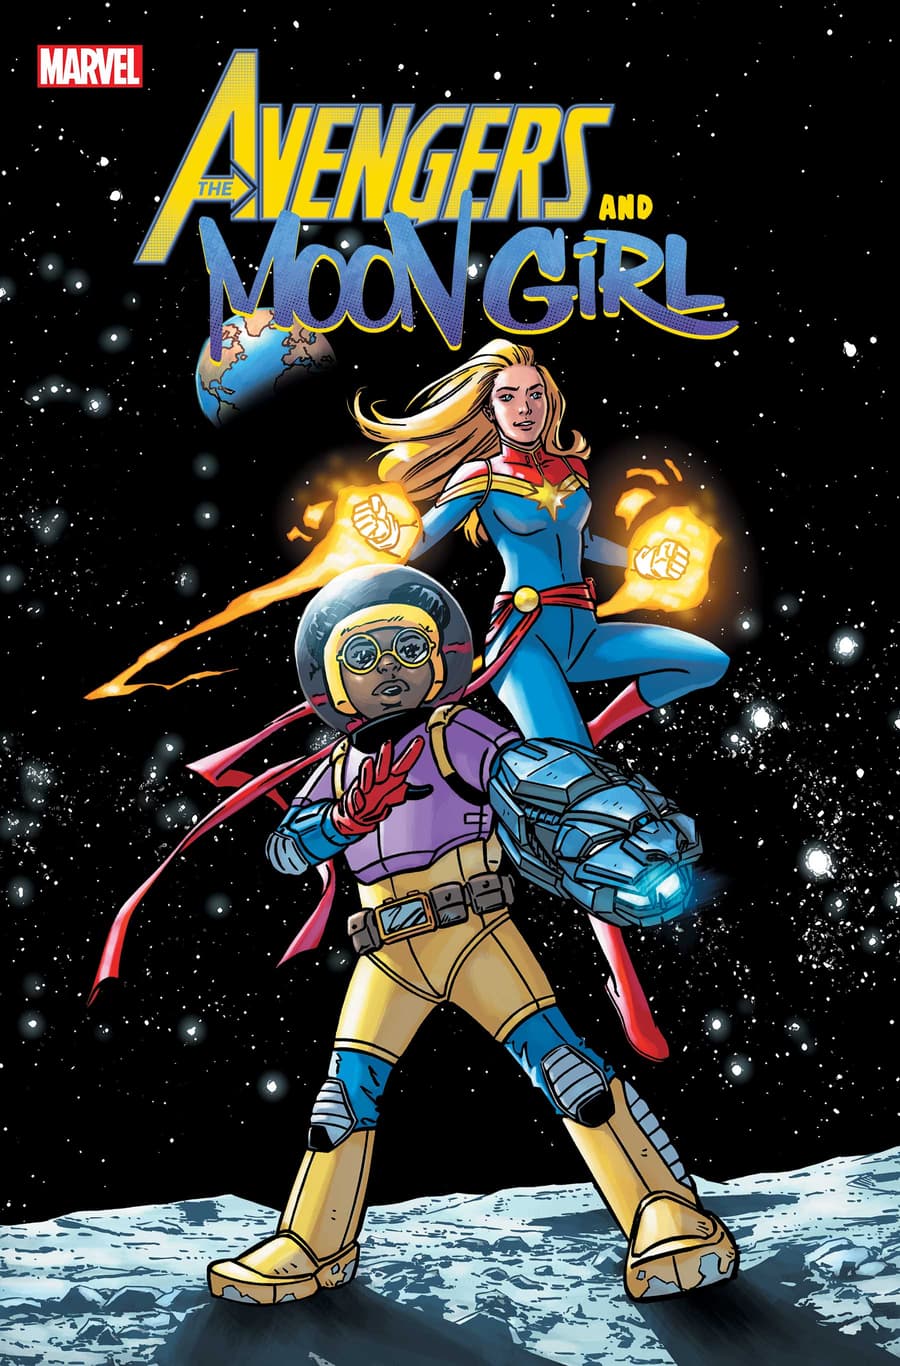 Avengers & Moon Girl #1 cover by Alitha E. Martinez